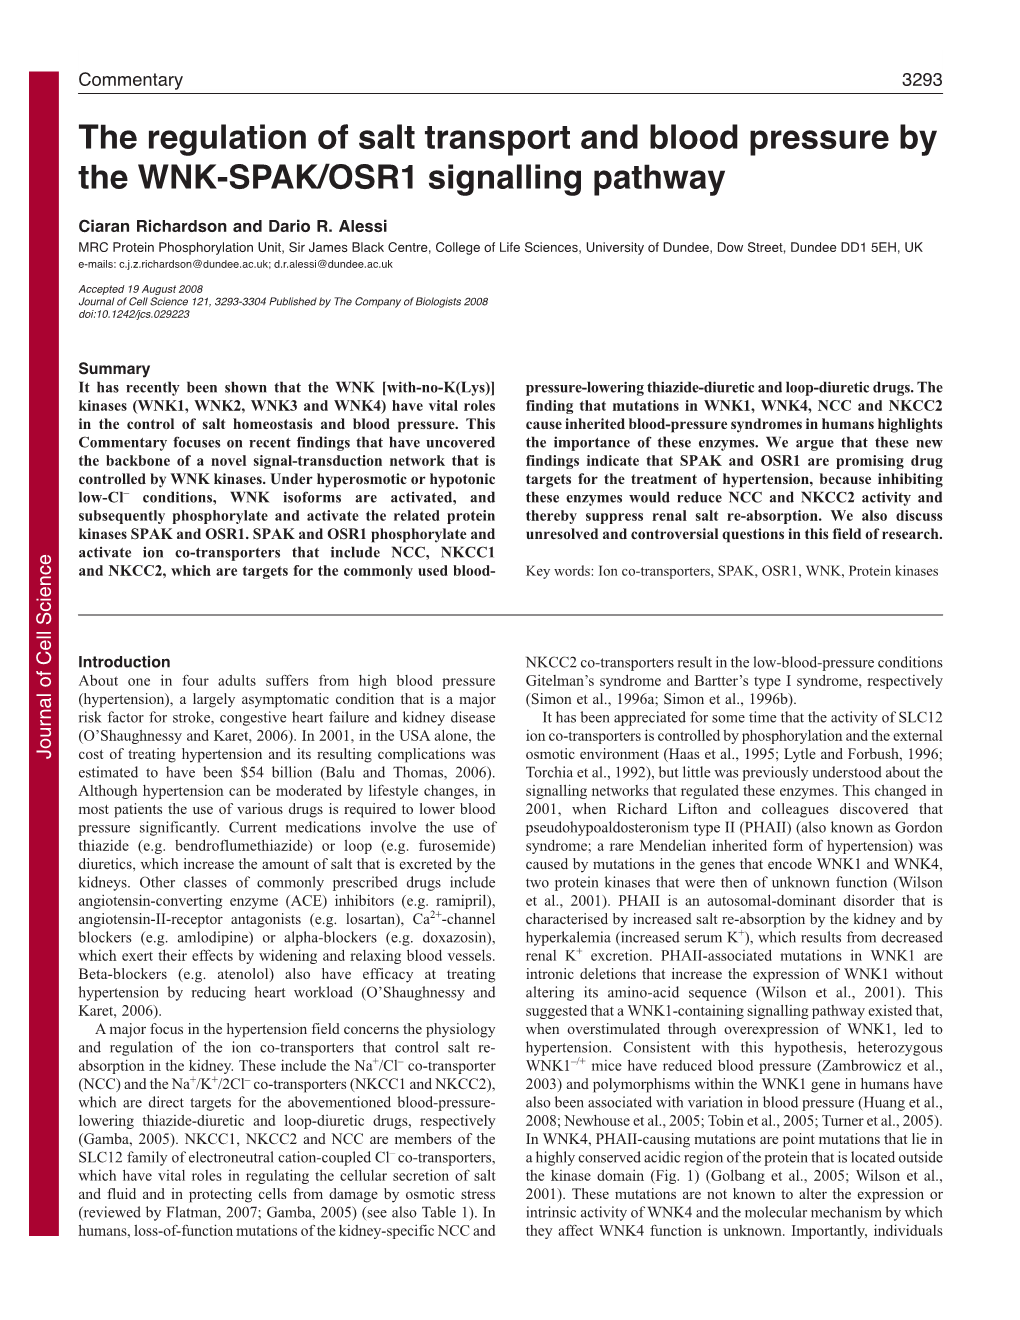 The Regulation of Salt Transport and Blood Pressure by the WNK-SPAK/OSR1 Signalling Pathway